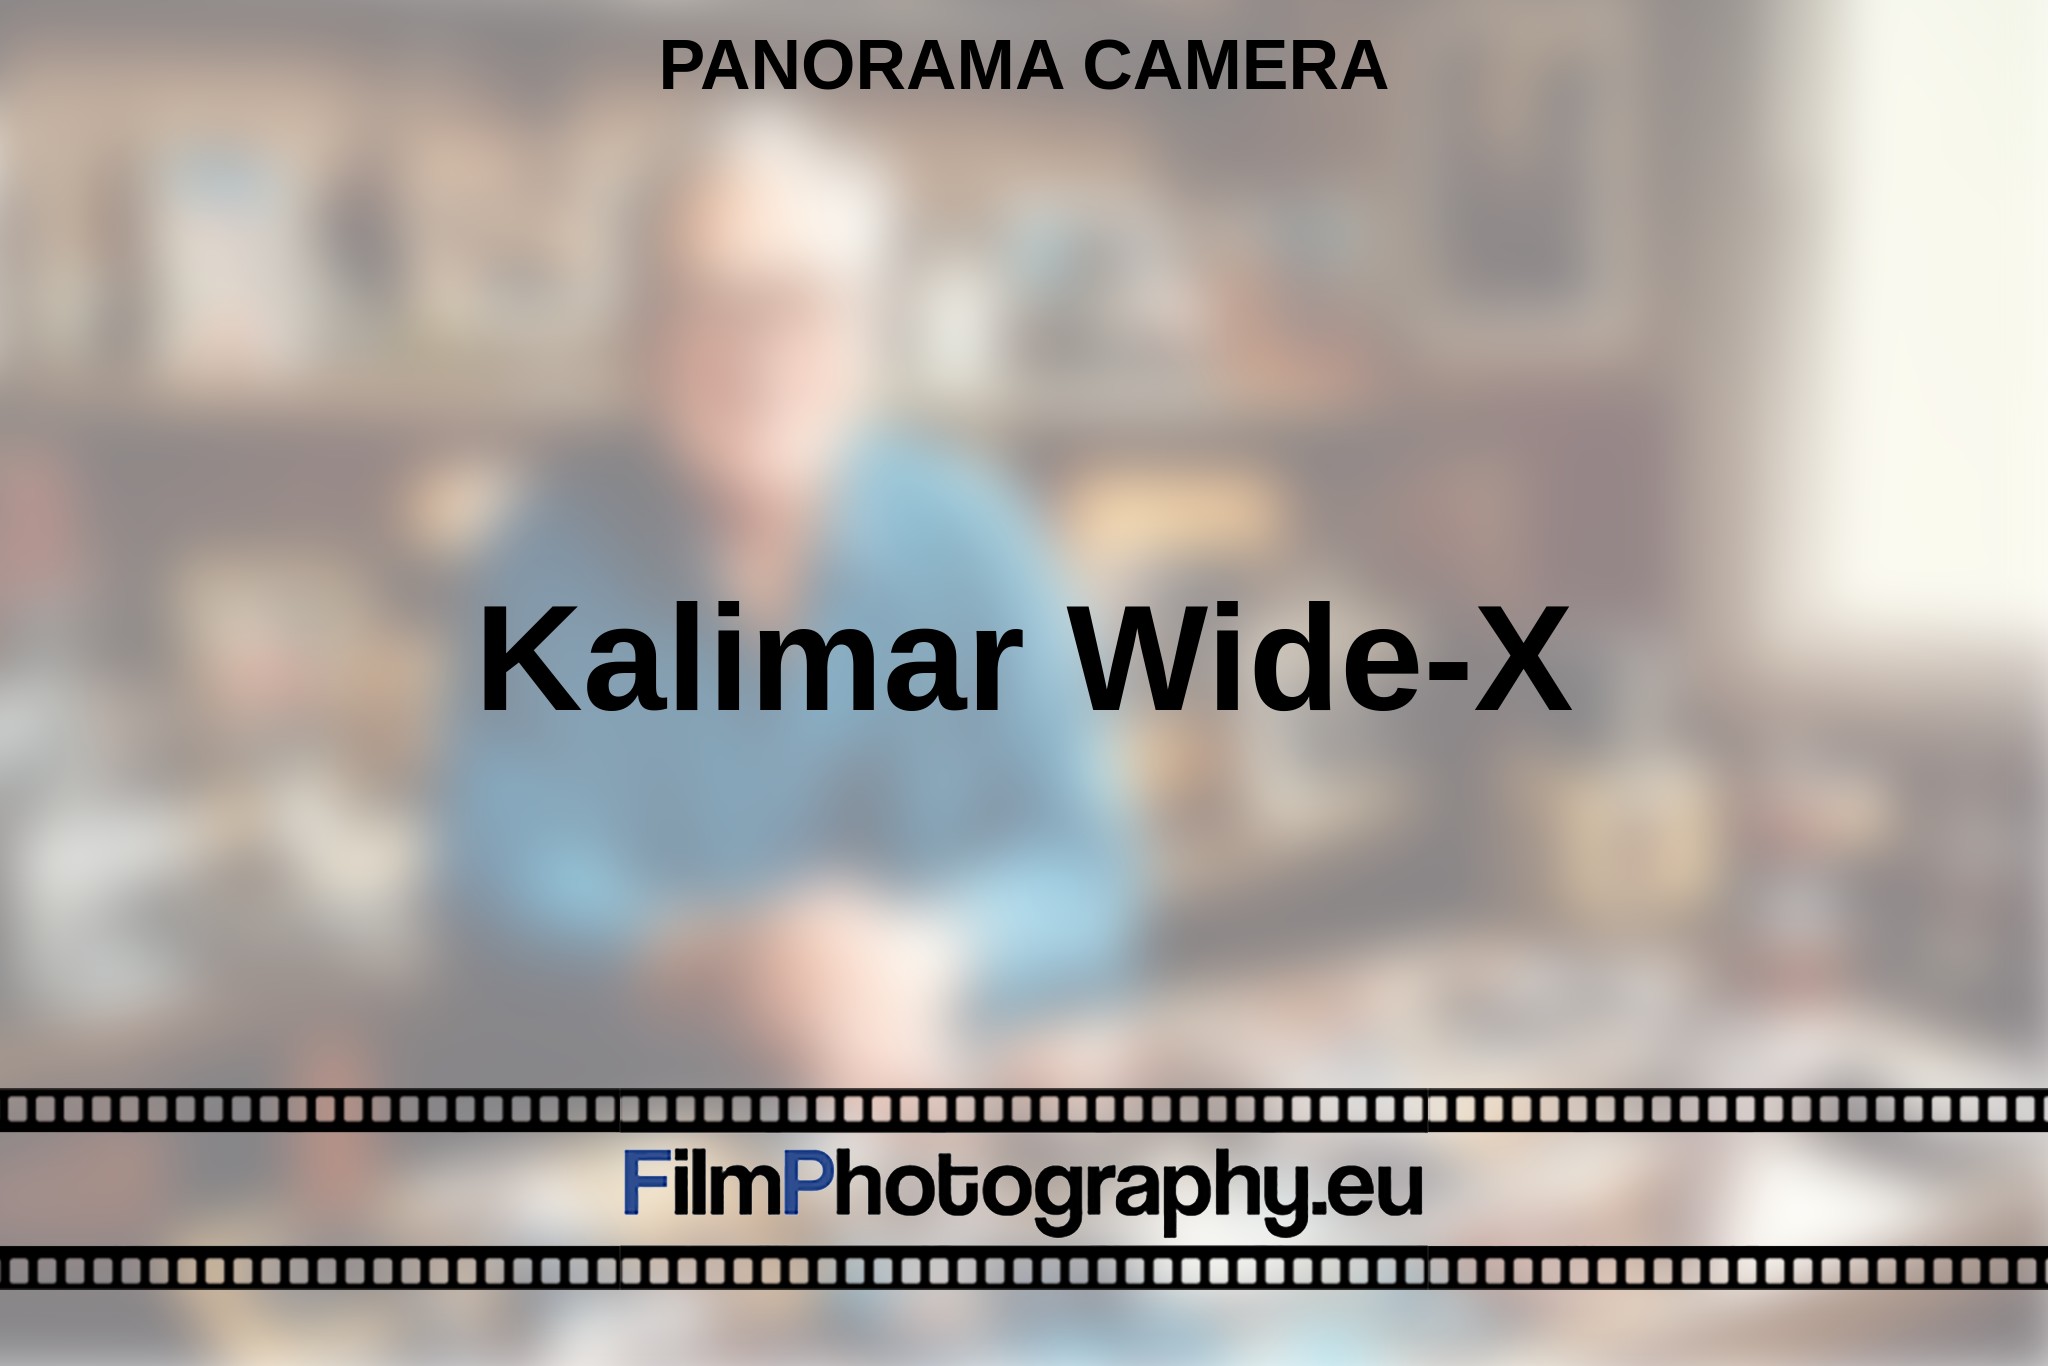 kalimar-wide-x-panorama-camera-en-bnv.jpg